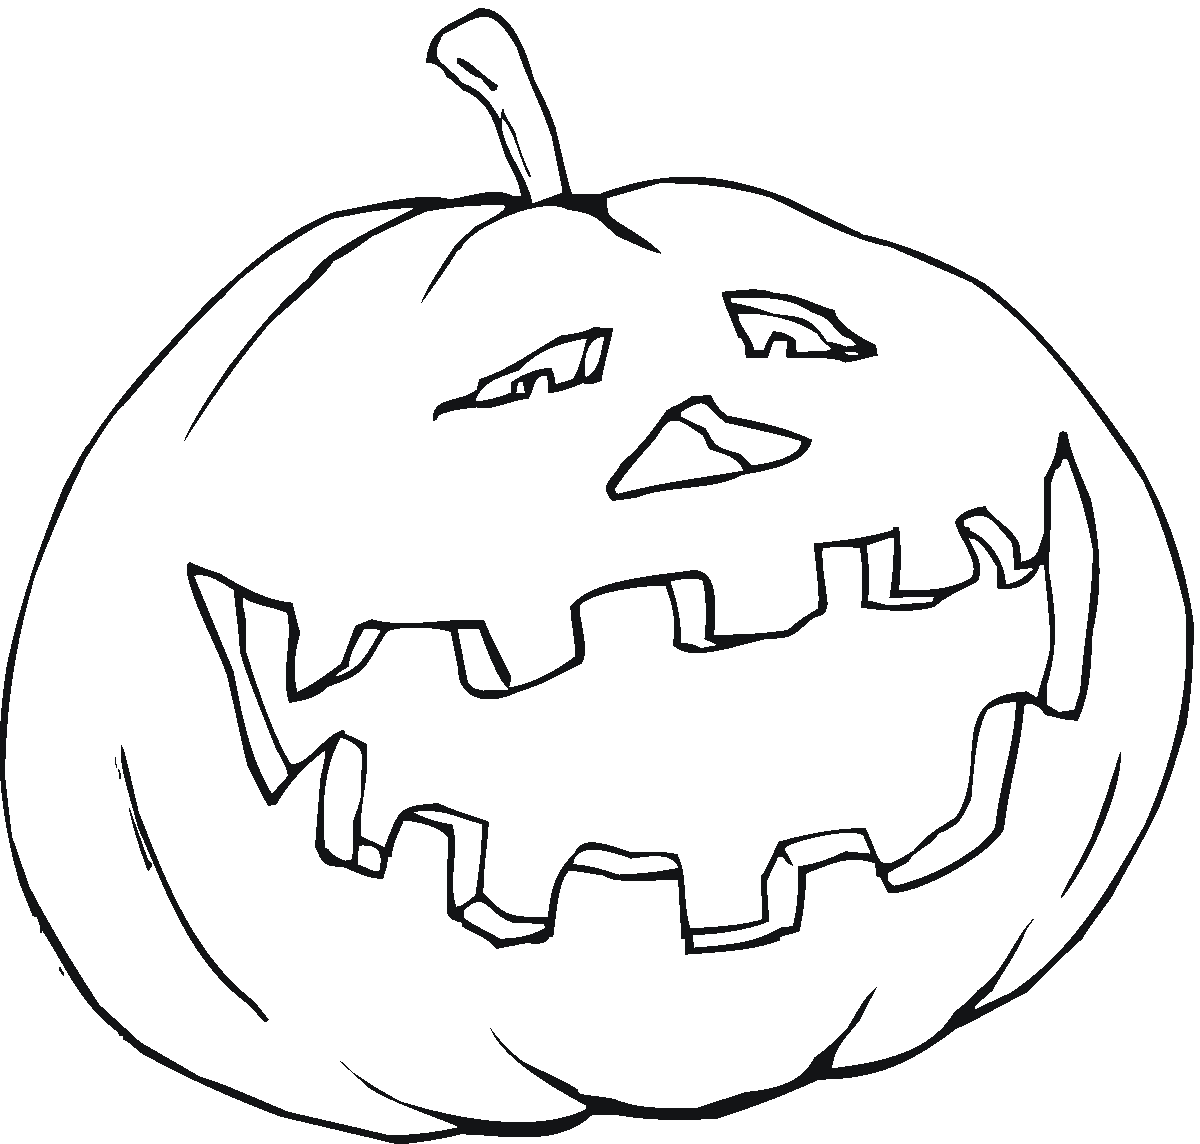 Fun Carved Halloween Pumpkin